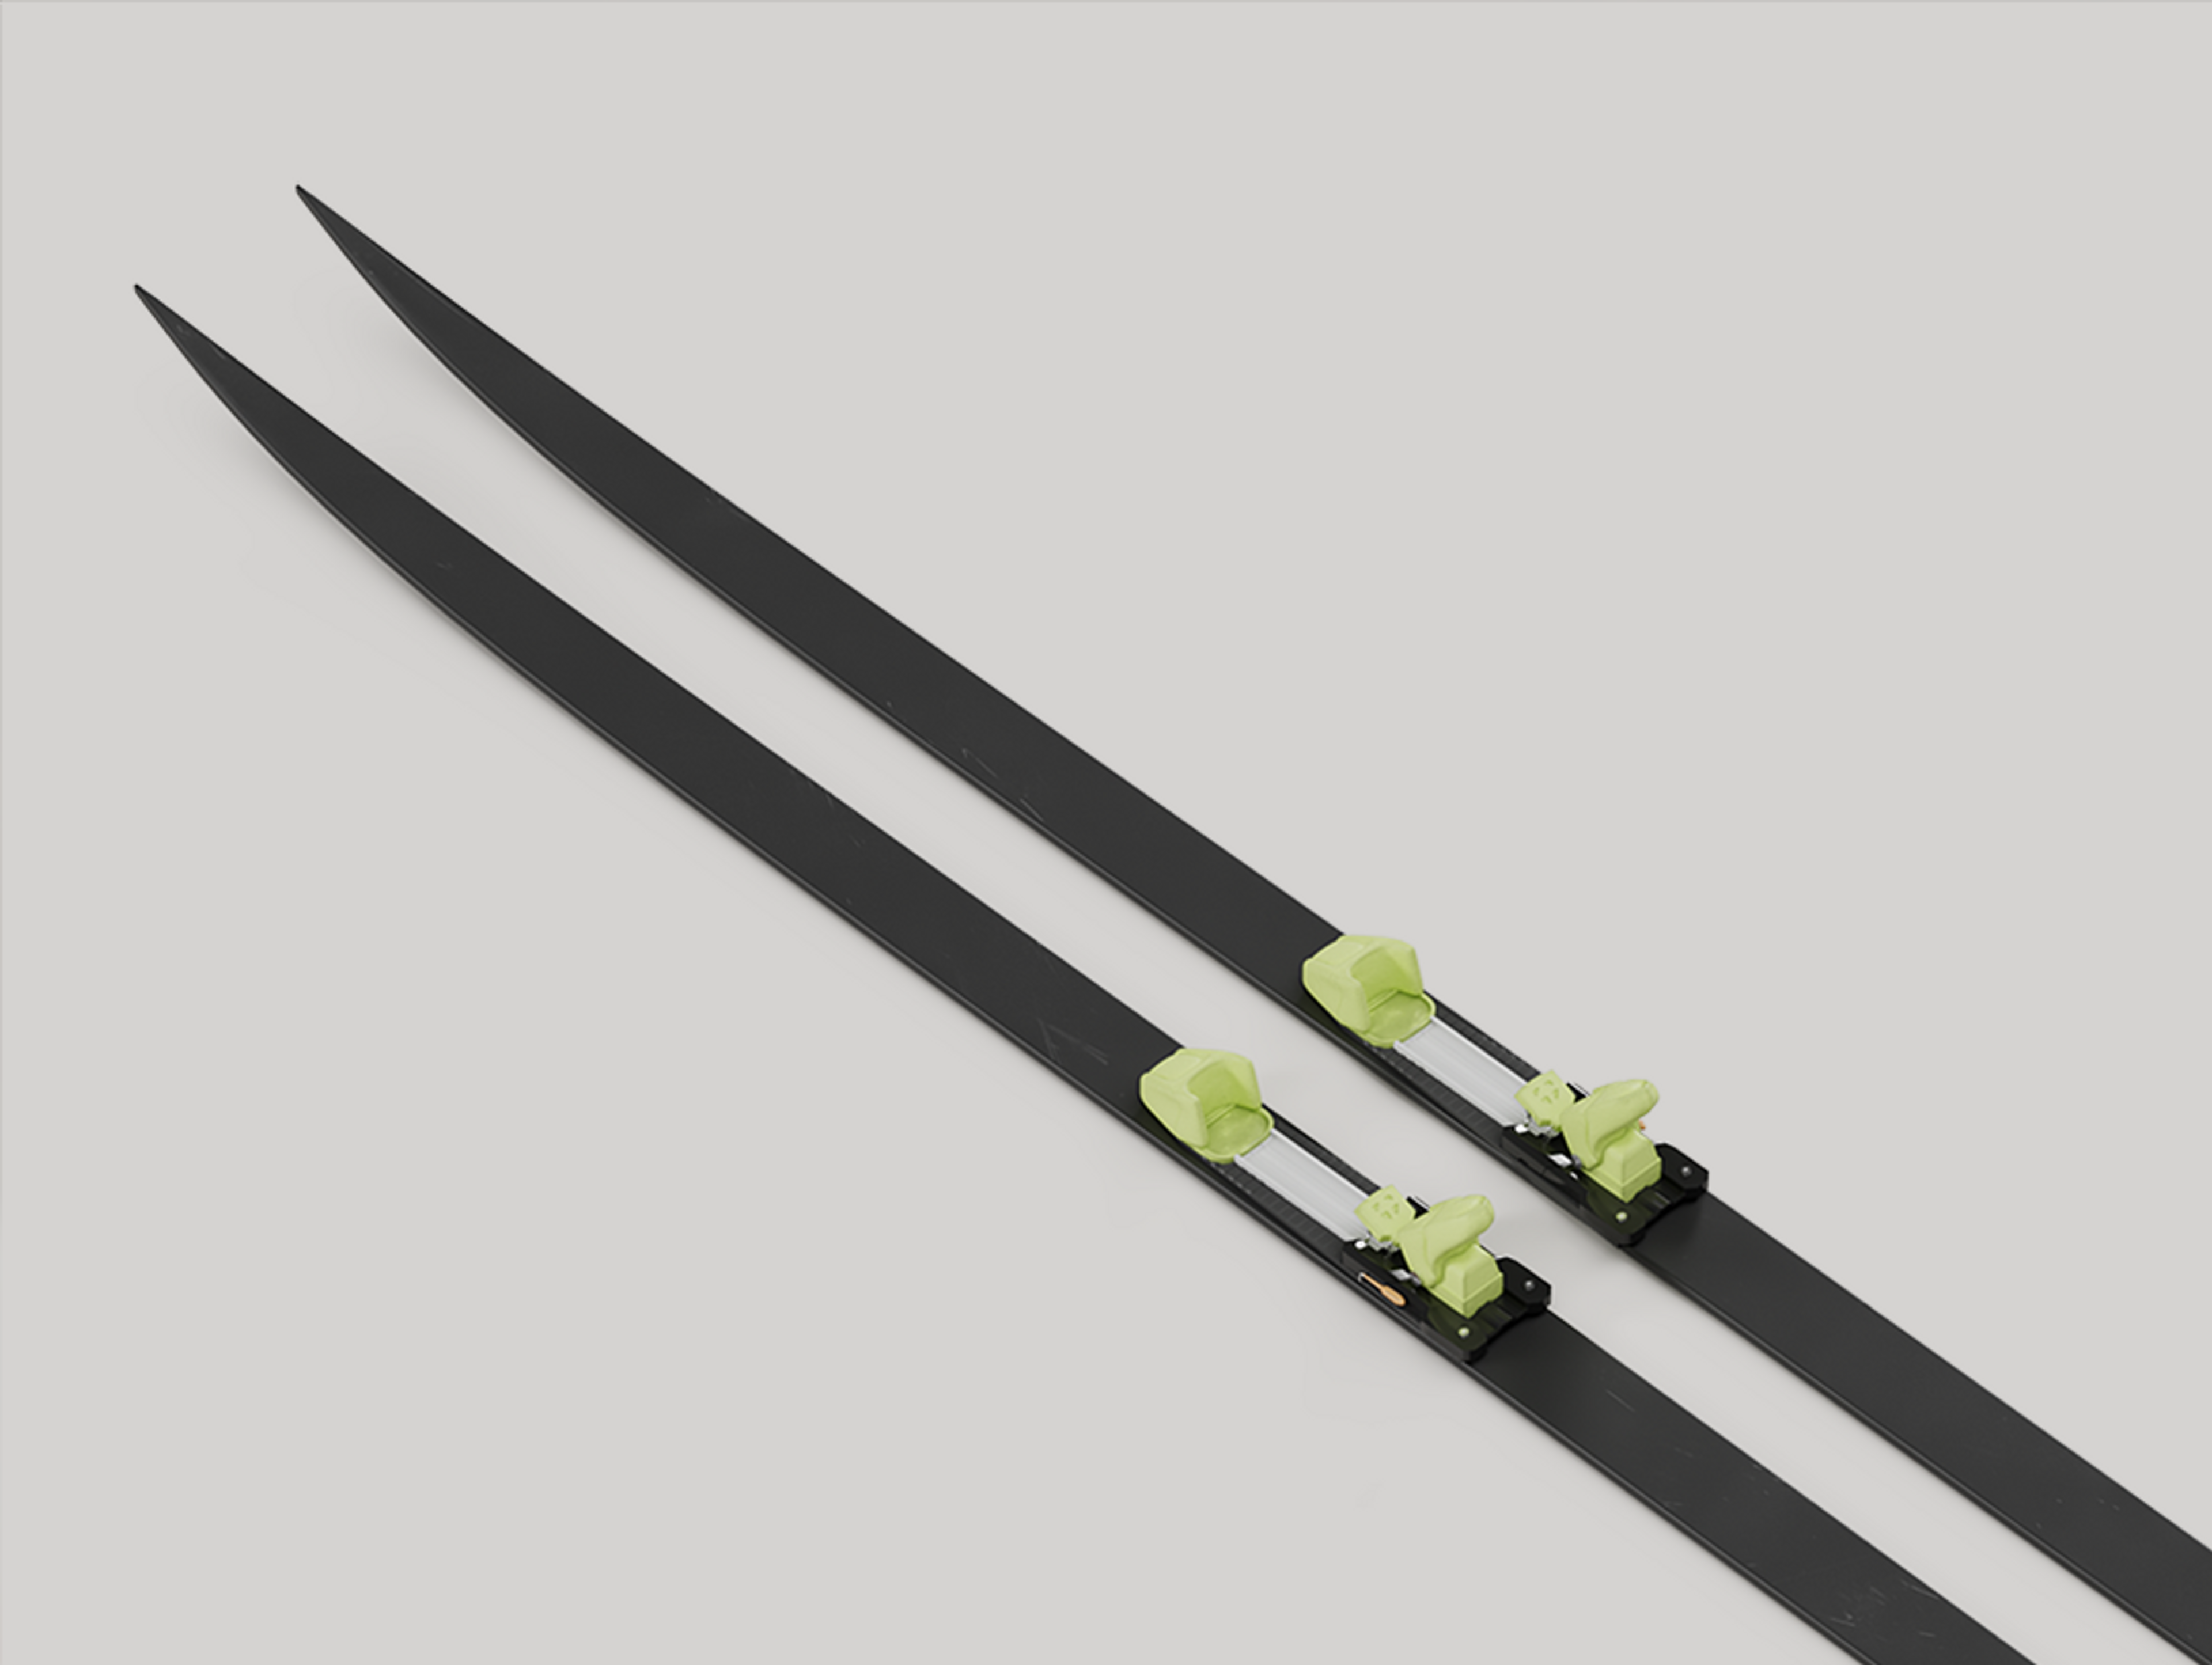 a pair of black skis